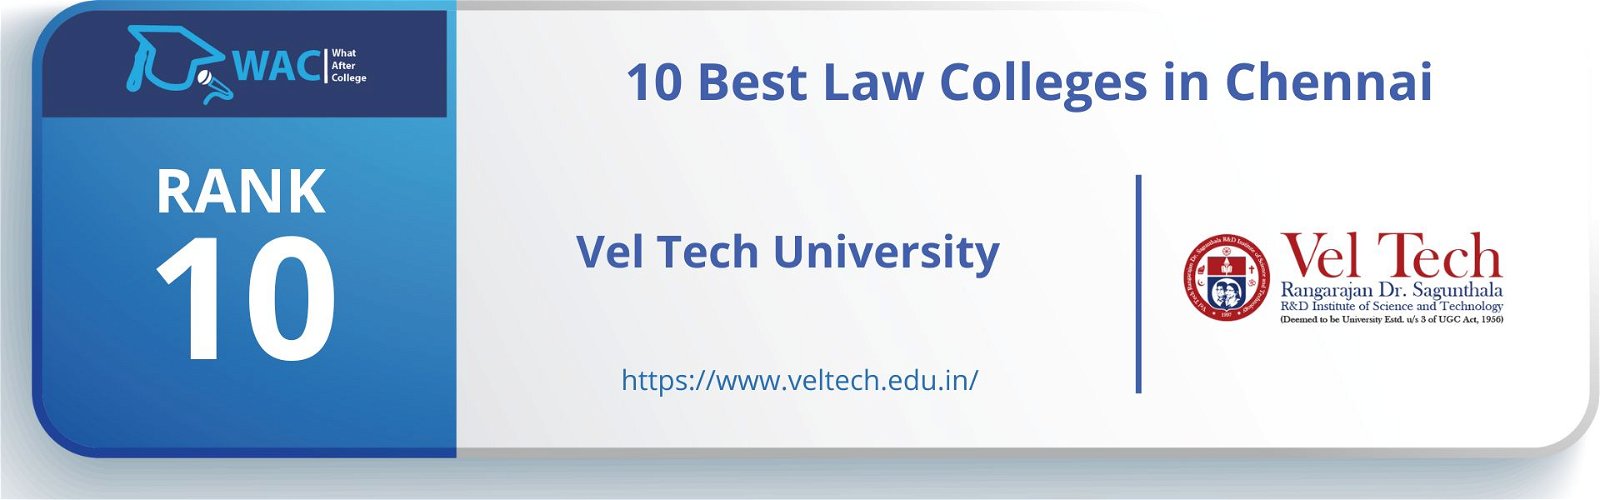 Vel Tech University